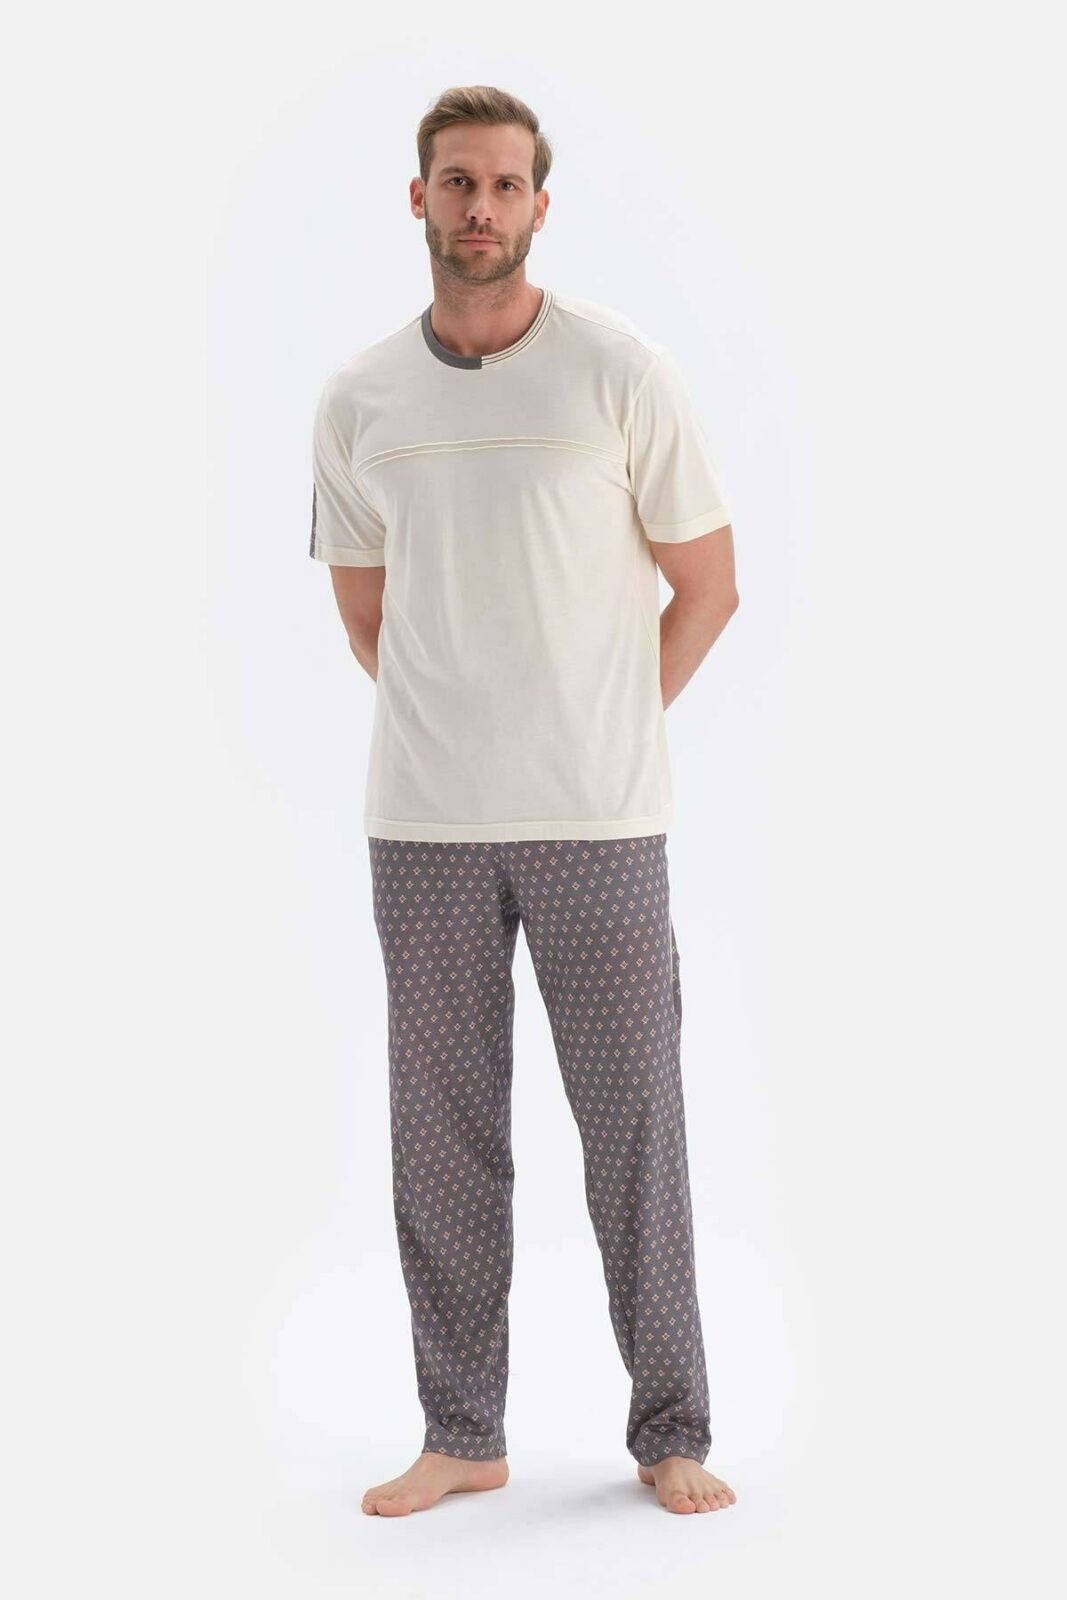 Dagi Pajama Set - White